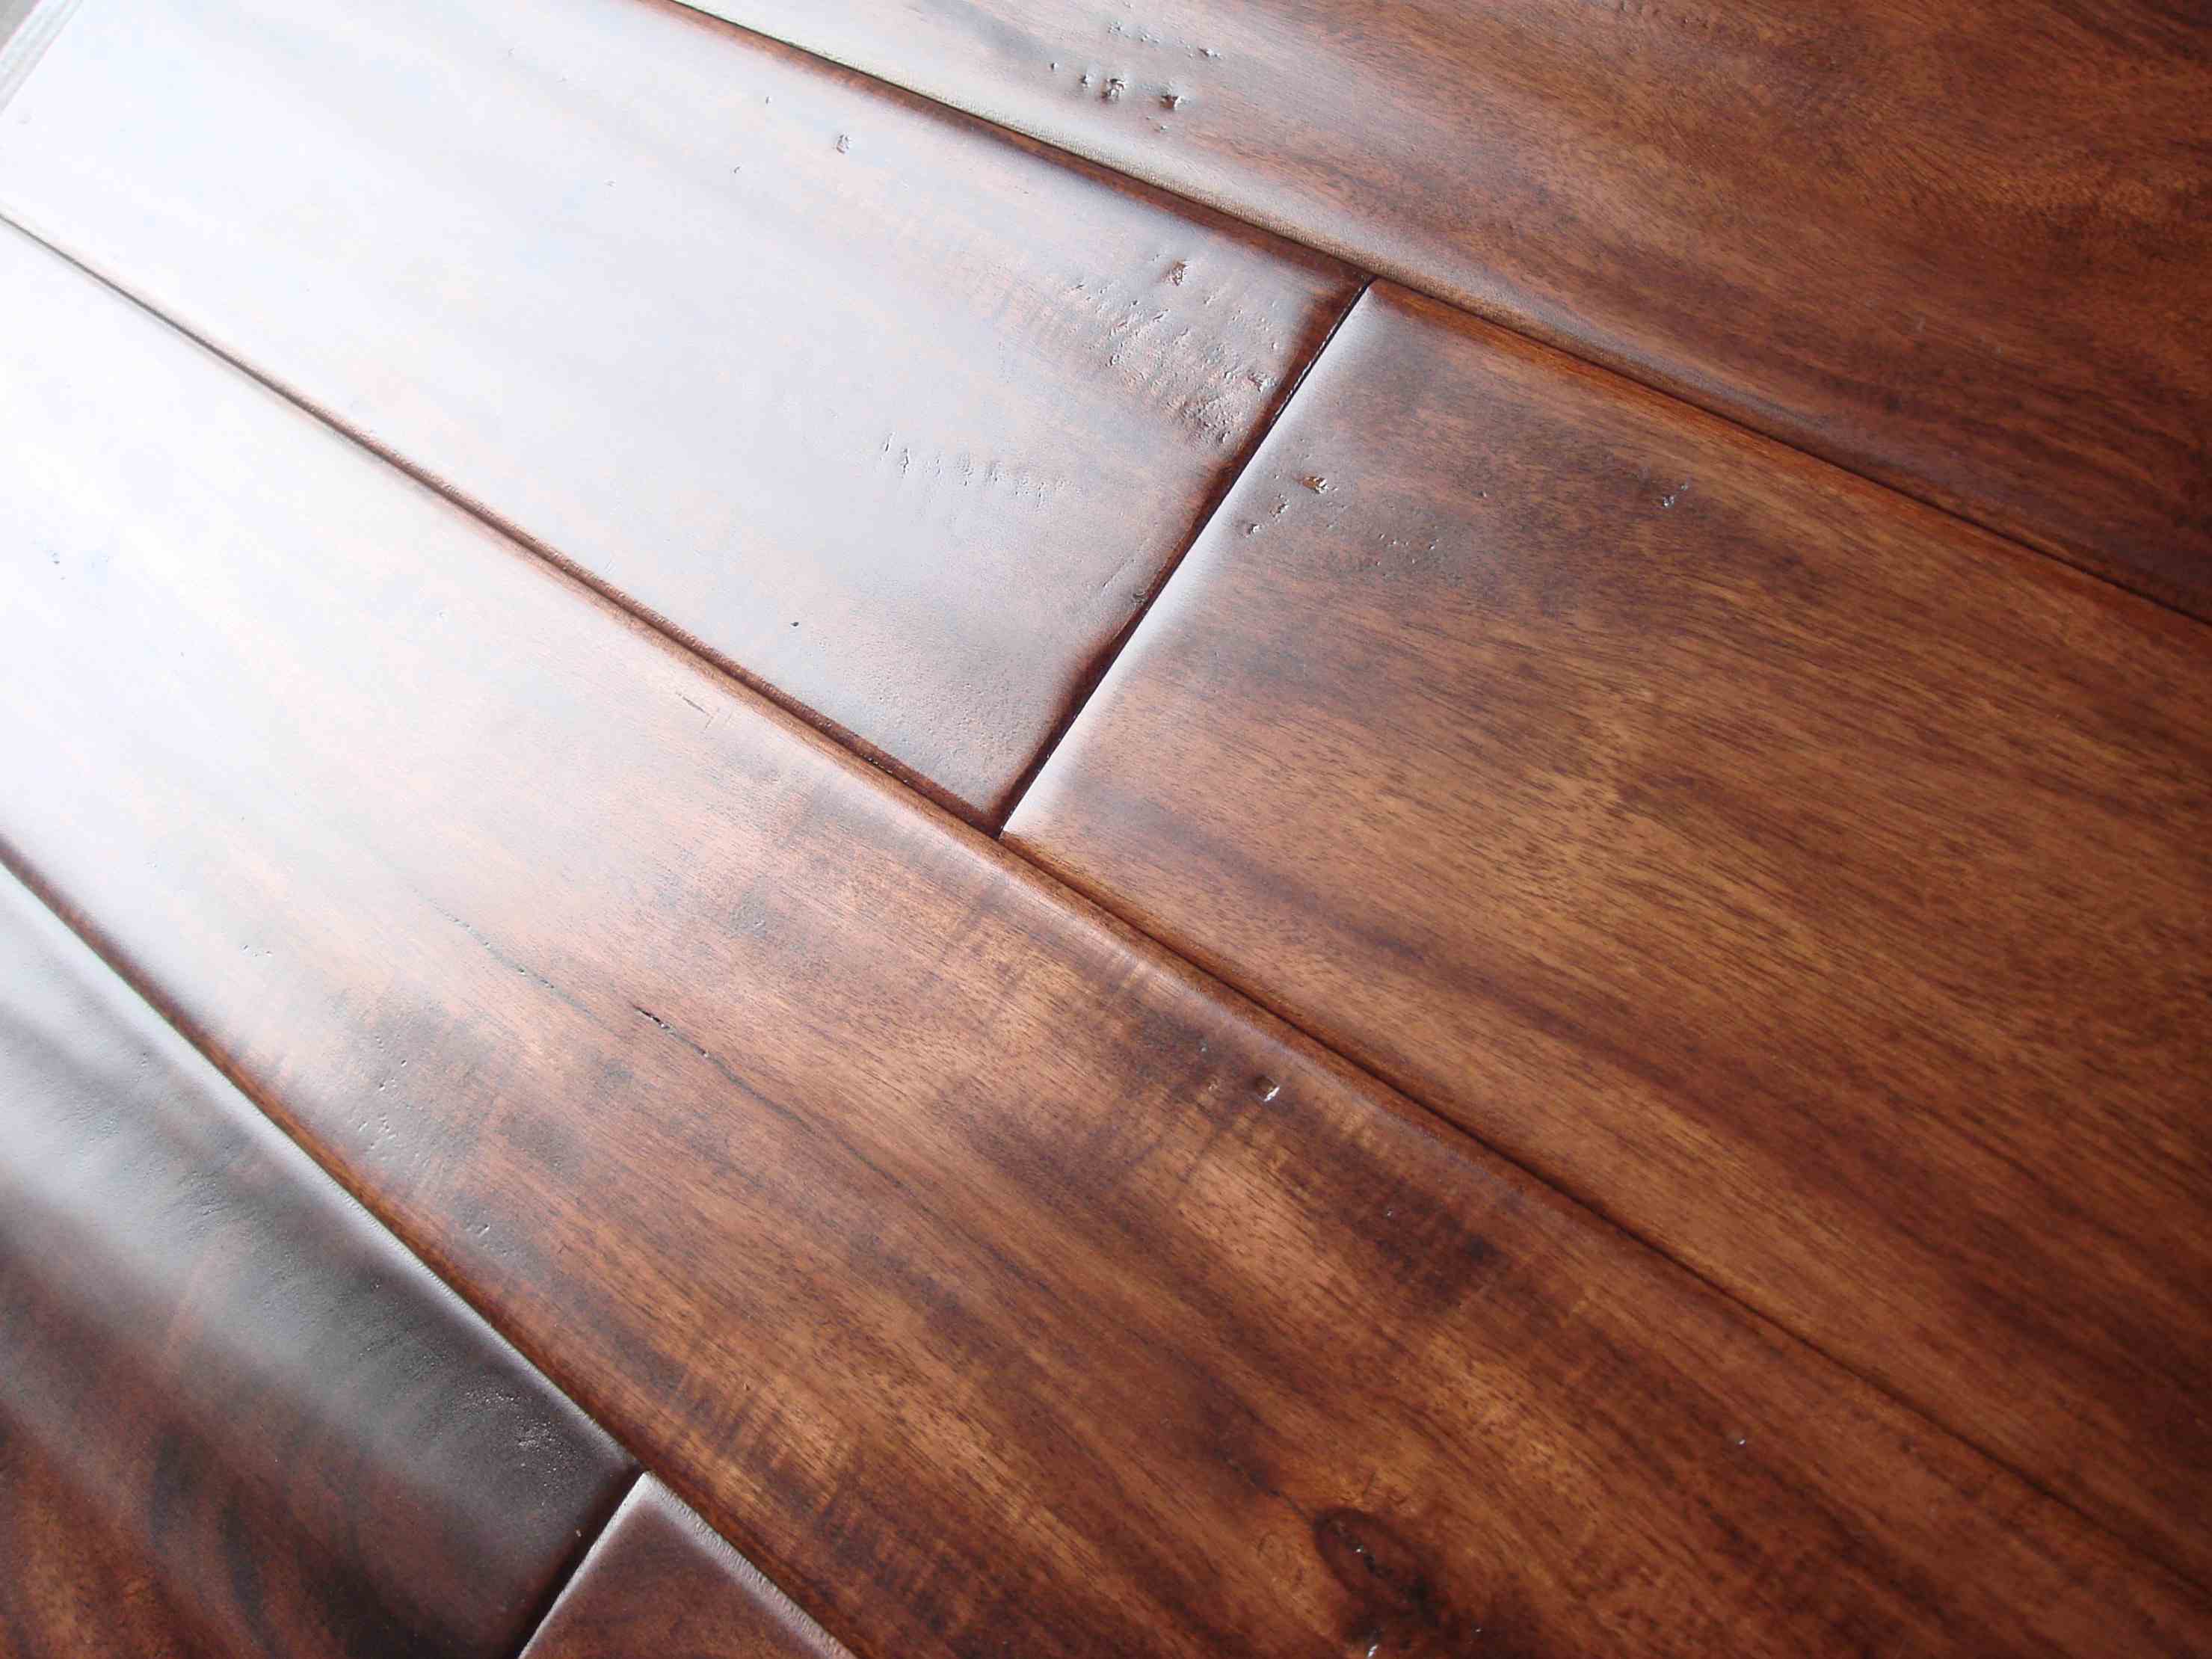 High Glossy Plastic Wood Laminate Flooring (810*150*8mm)